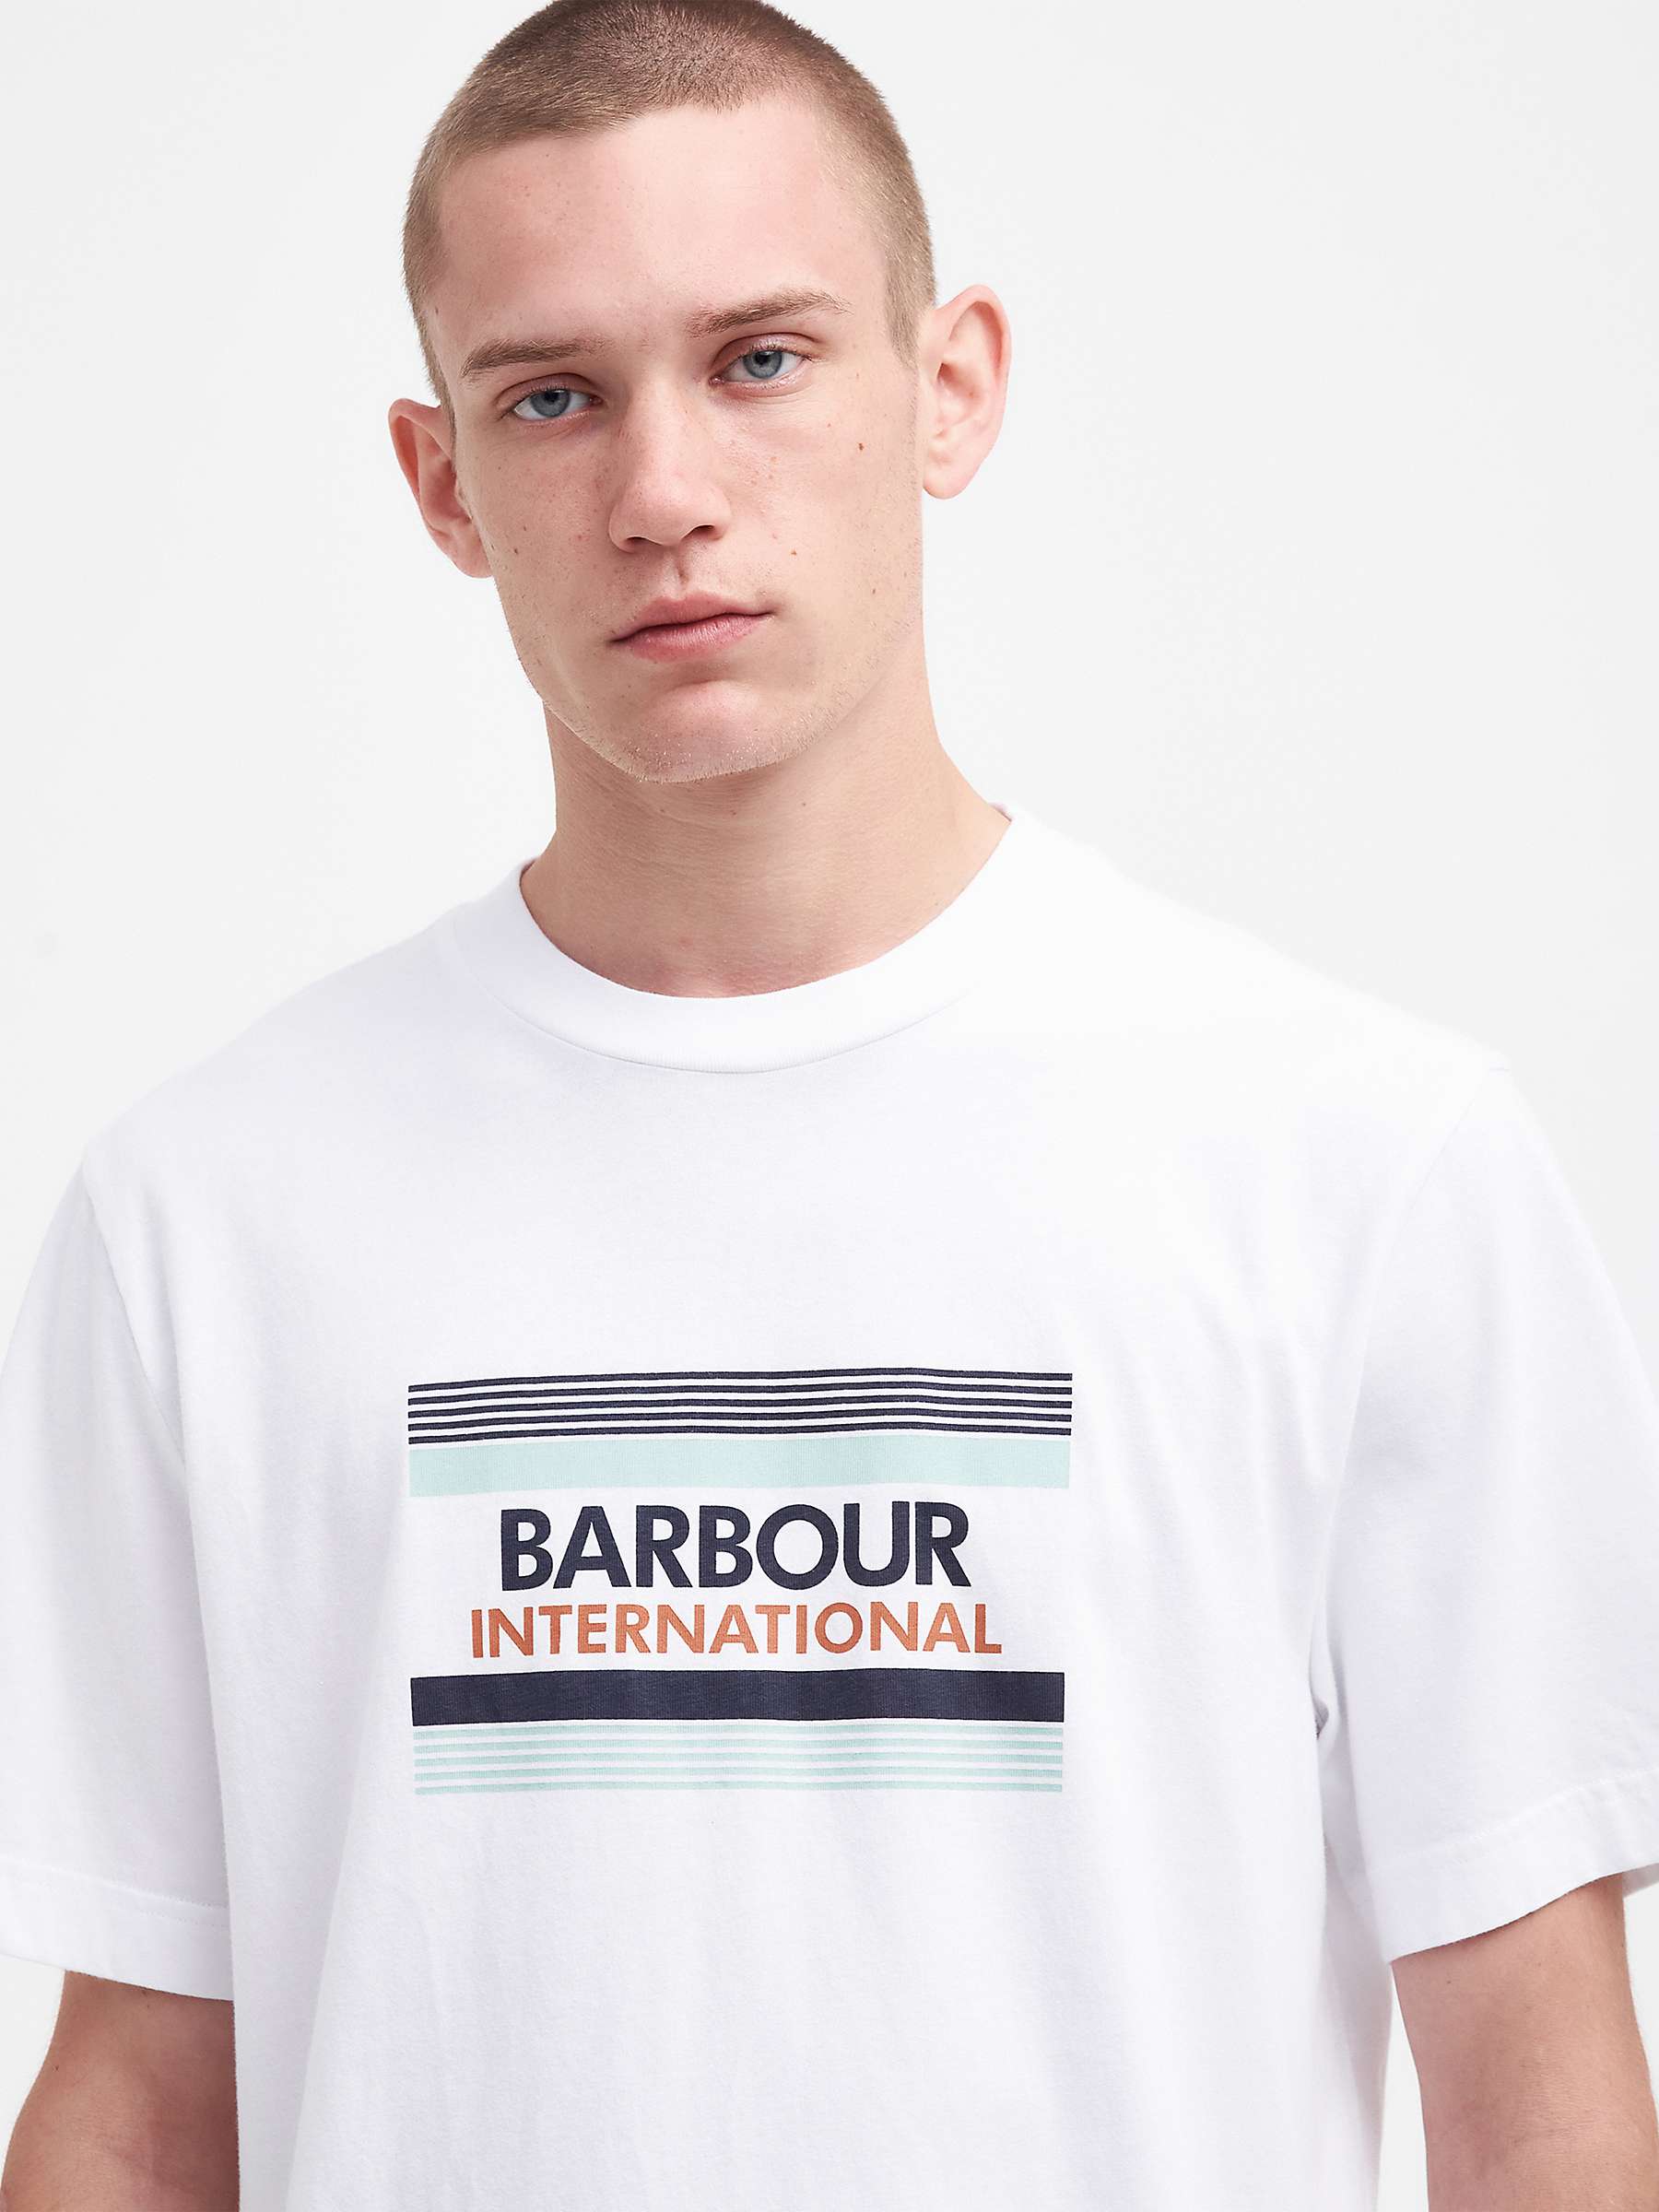 Buy Barbour International Radley T-Shirt Online at johnlewis.com